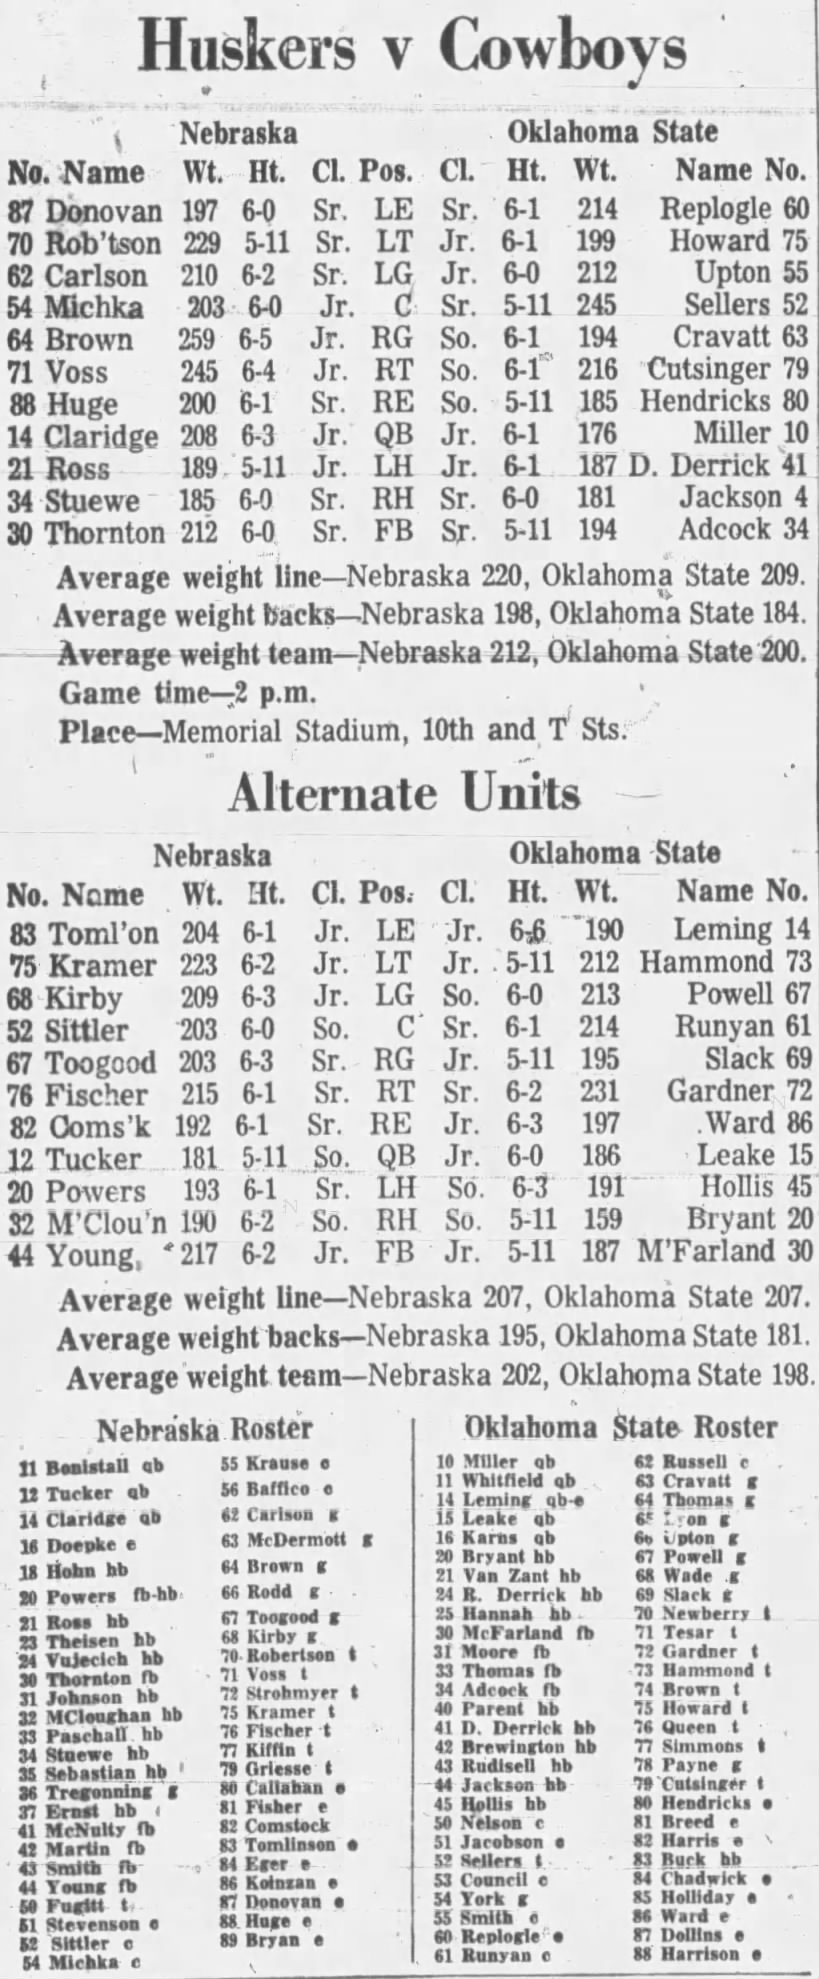 1962 Nebraska-Oklahoma State football game lineups